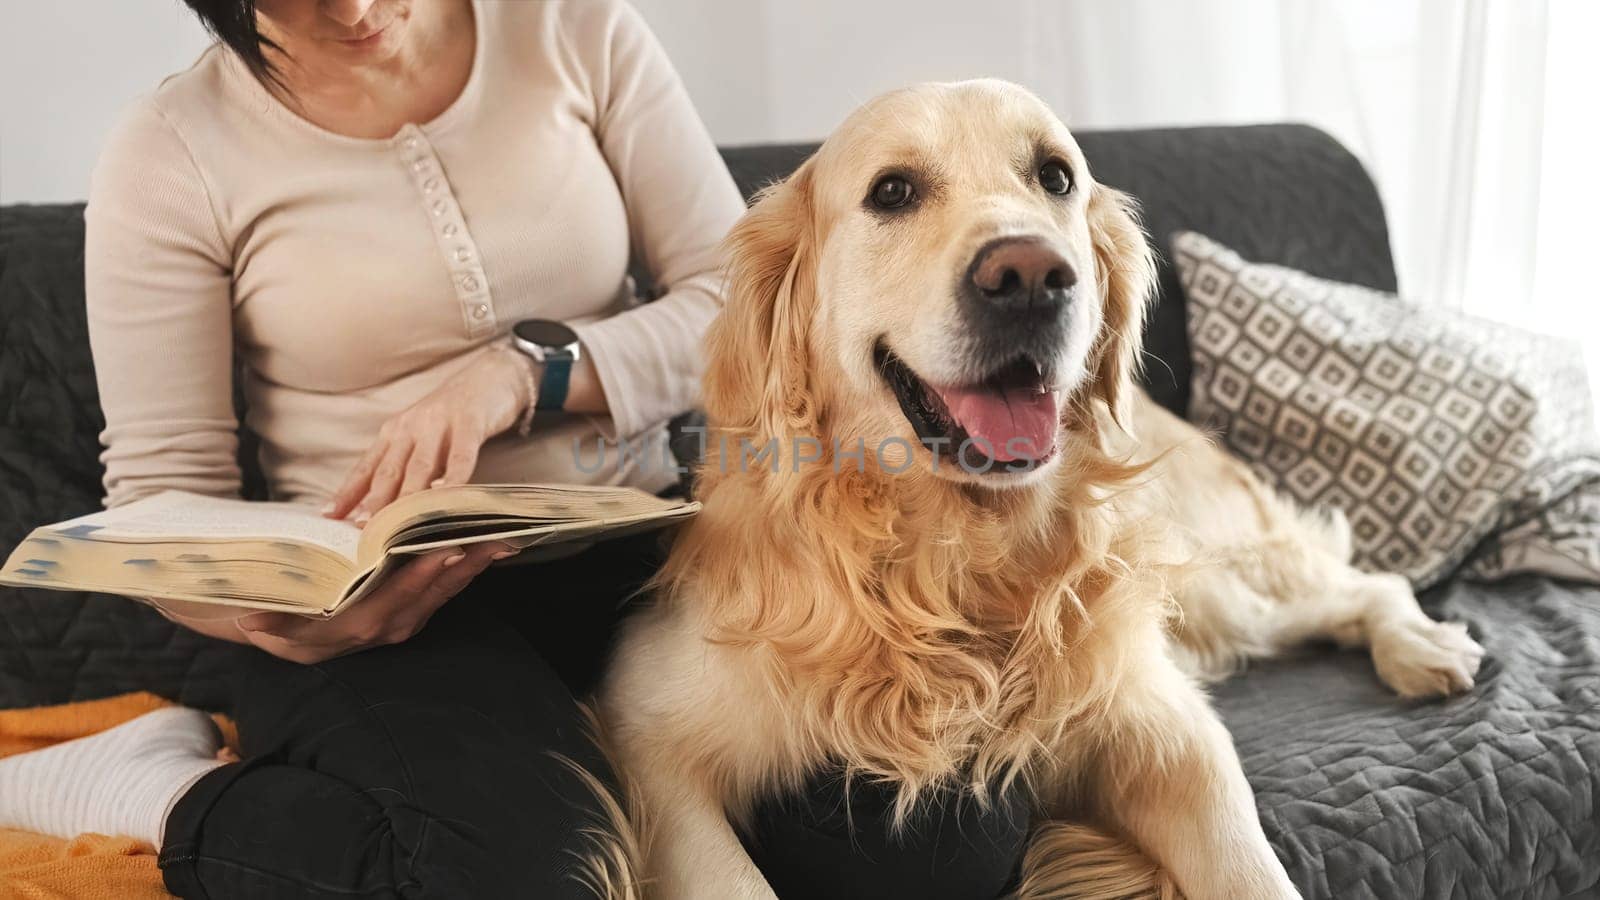 Girl with golden retriever dog reading book by GekaSkr